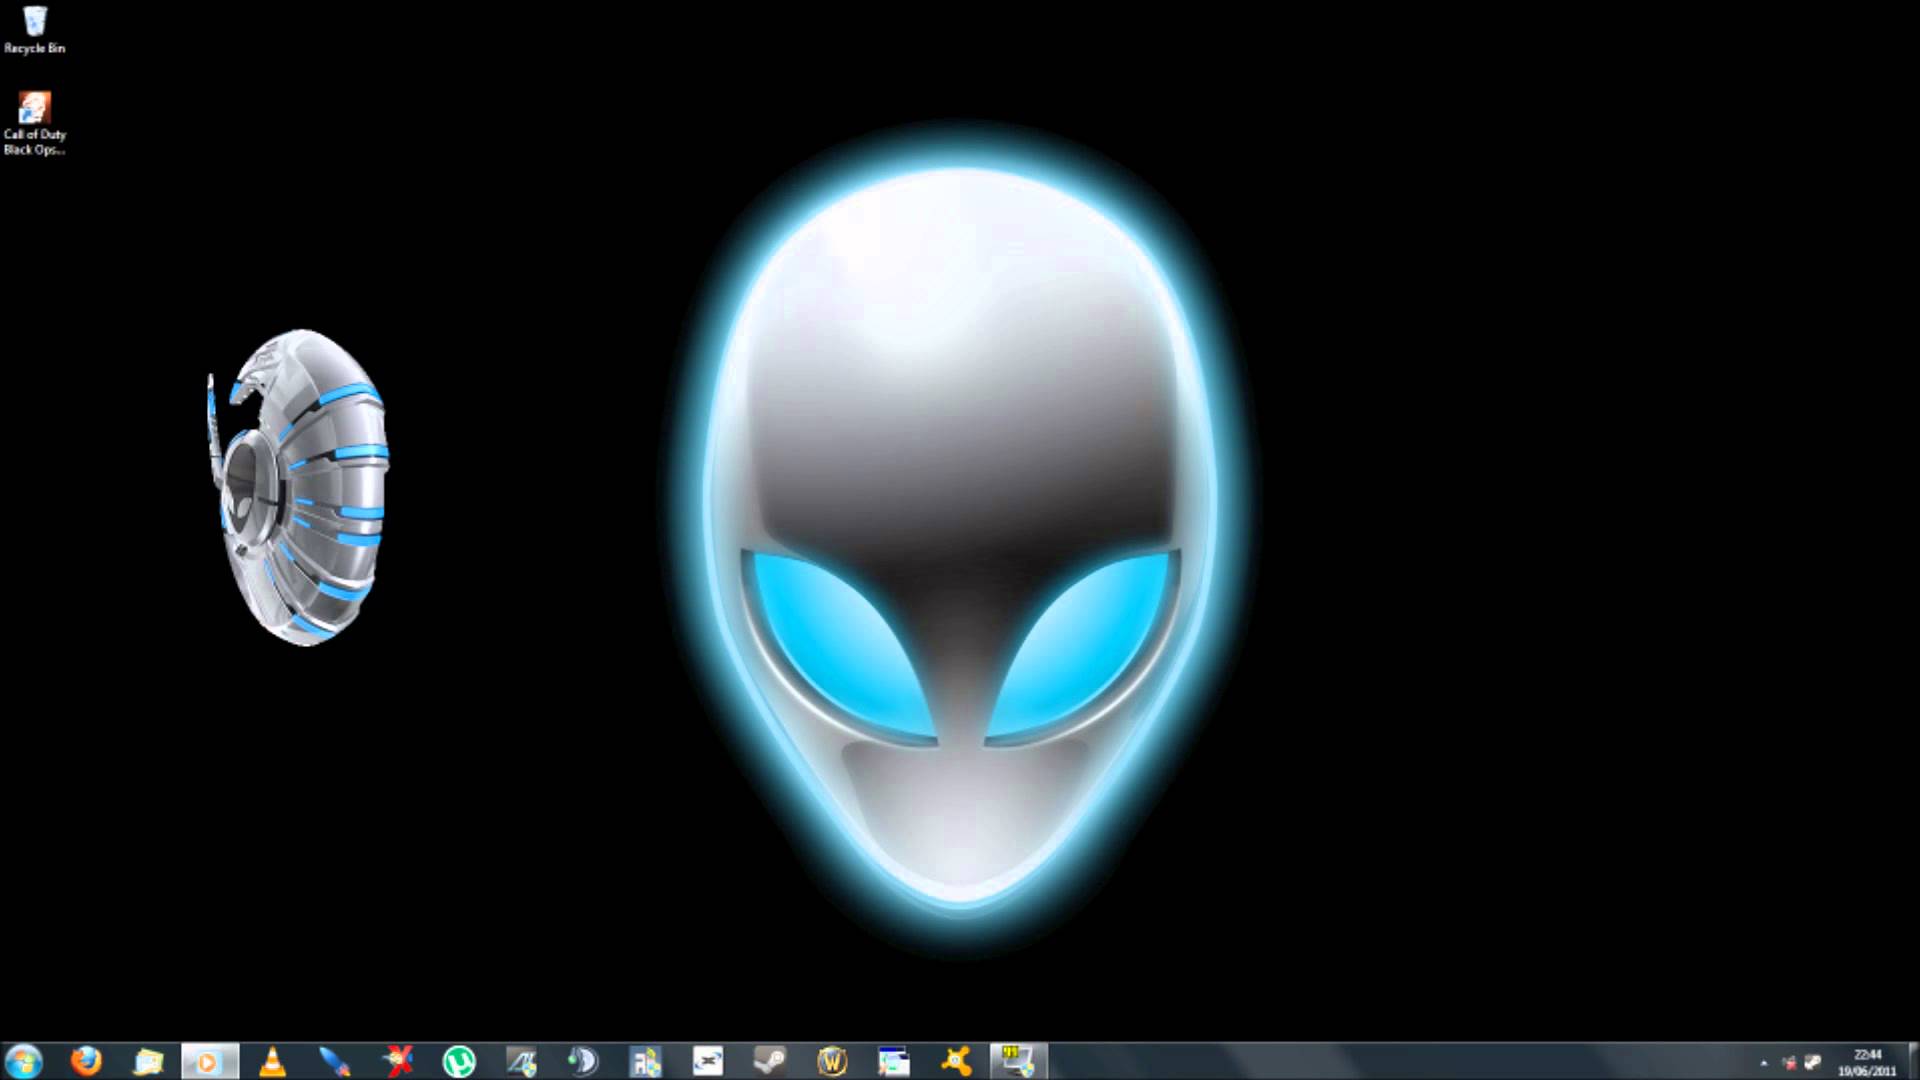 Alienware Windows 7 theme and Windows Media Player 12 skin 1920x1080